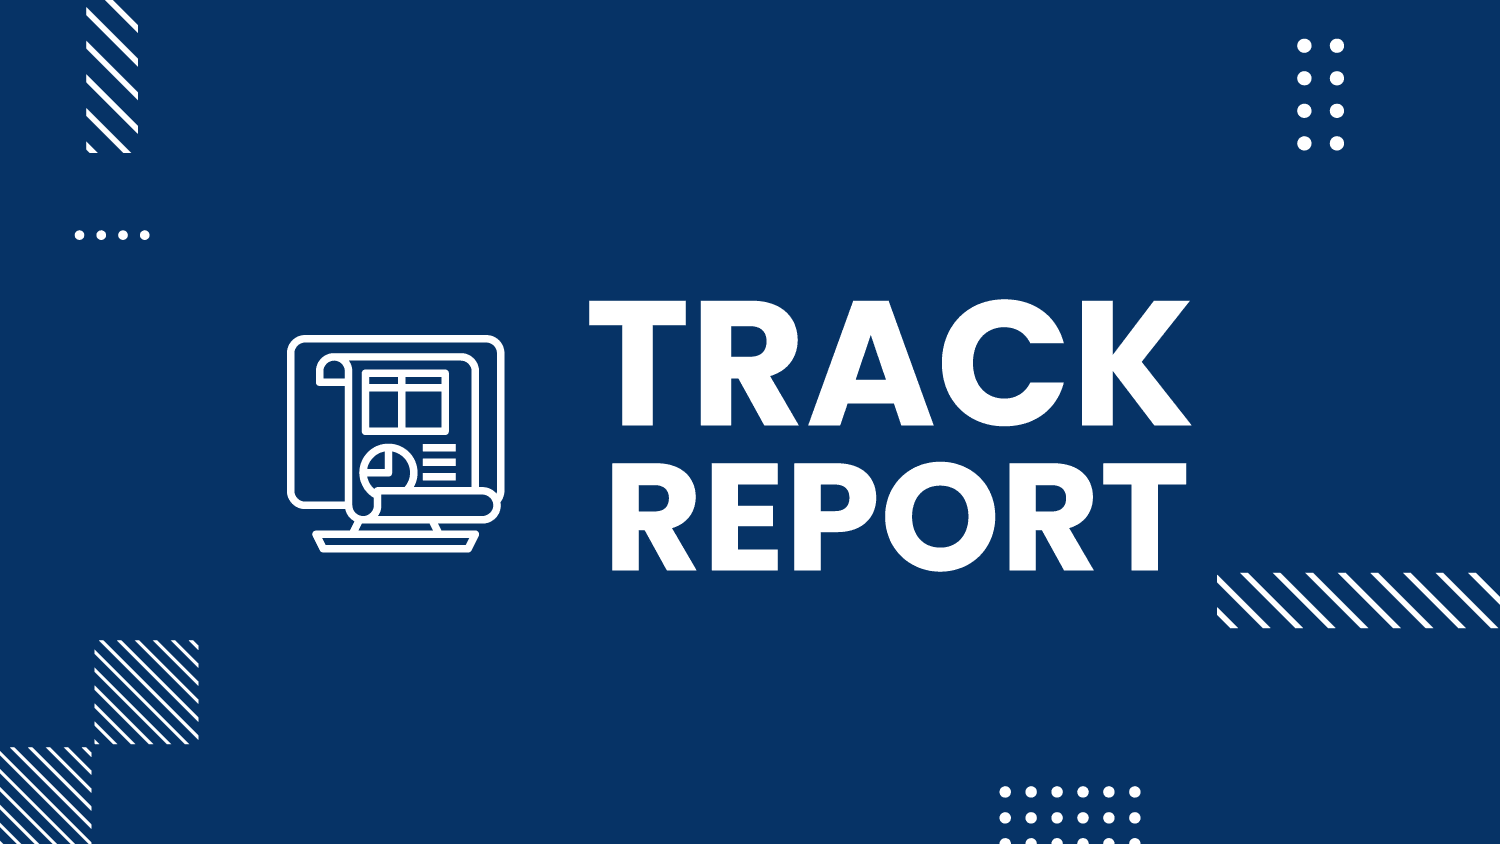 Track Report graphic